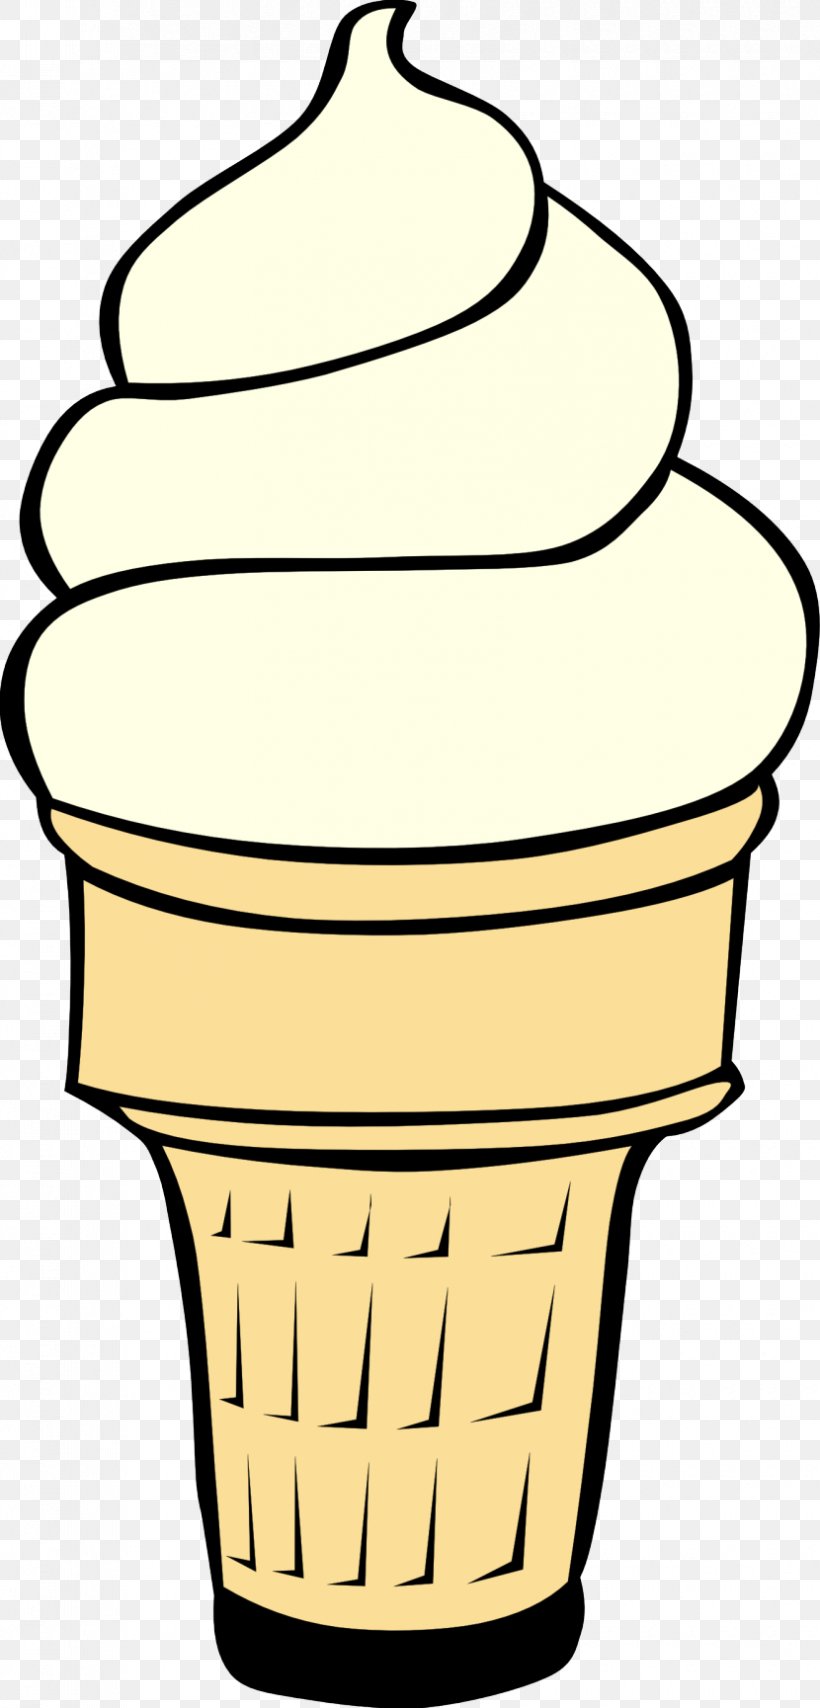 Clip Art Ice Cream Cone Yellow Line Art Frozen Dessert, PNG, 830x1729px, Ice Cream Cone, Dairy, Frozen Dessert, Line Art, Yellow Download Free